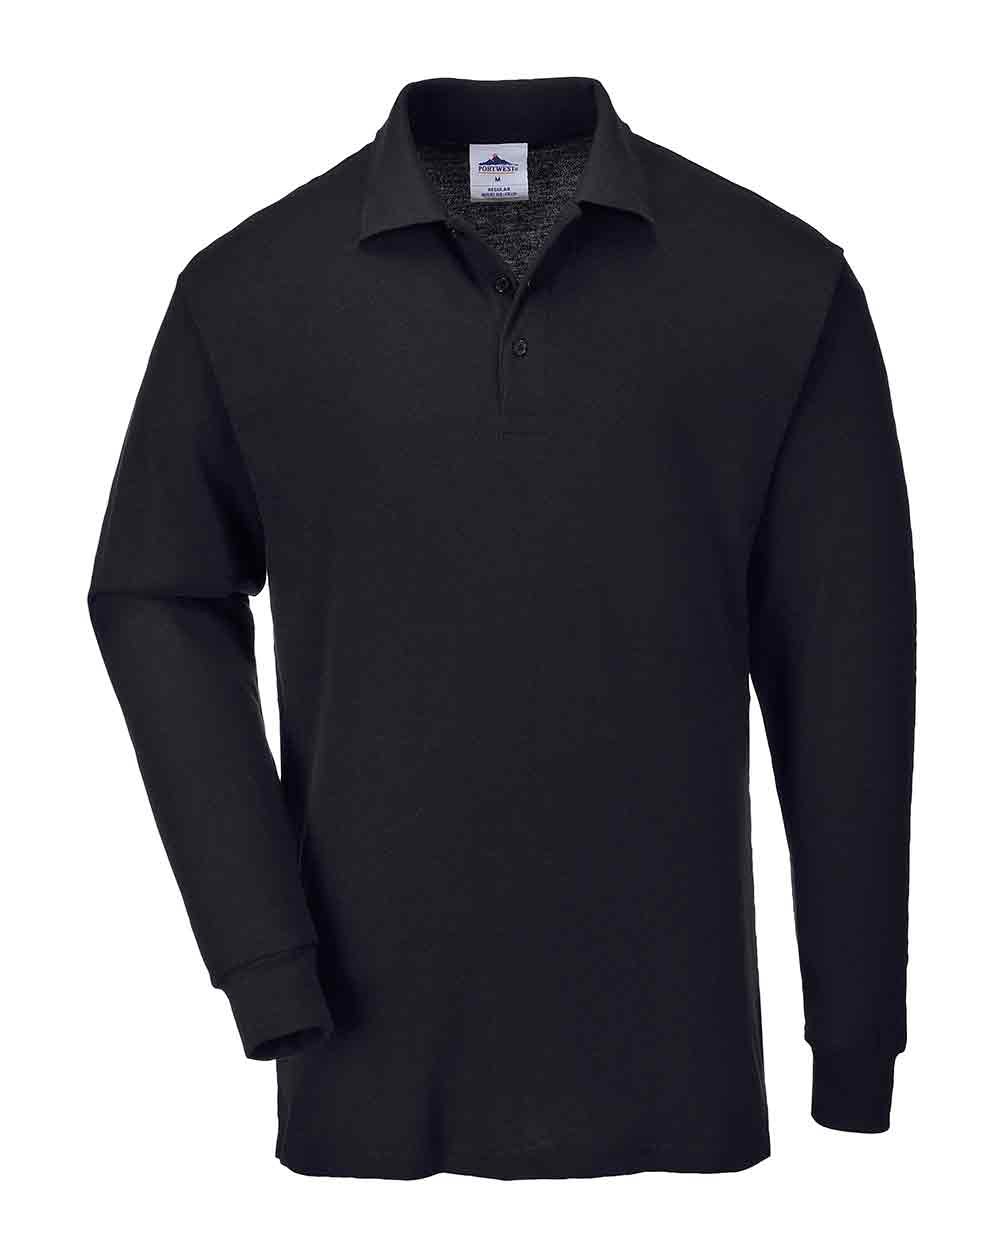 Portwest B212 Long Sleeved Polo Shirt - Workwear Polo Shirts & Tees -  Workwear Tops - Workwear - Best Workwear